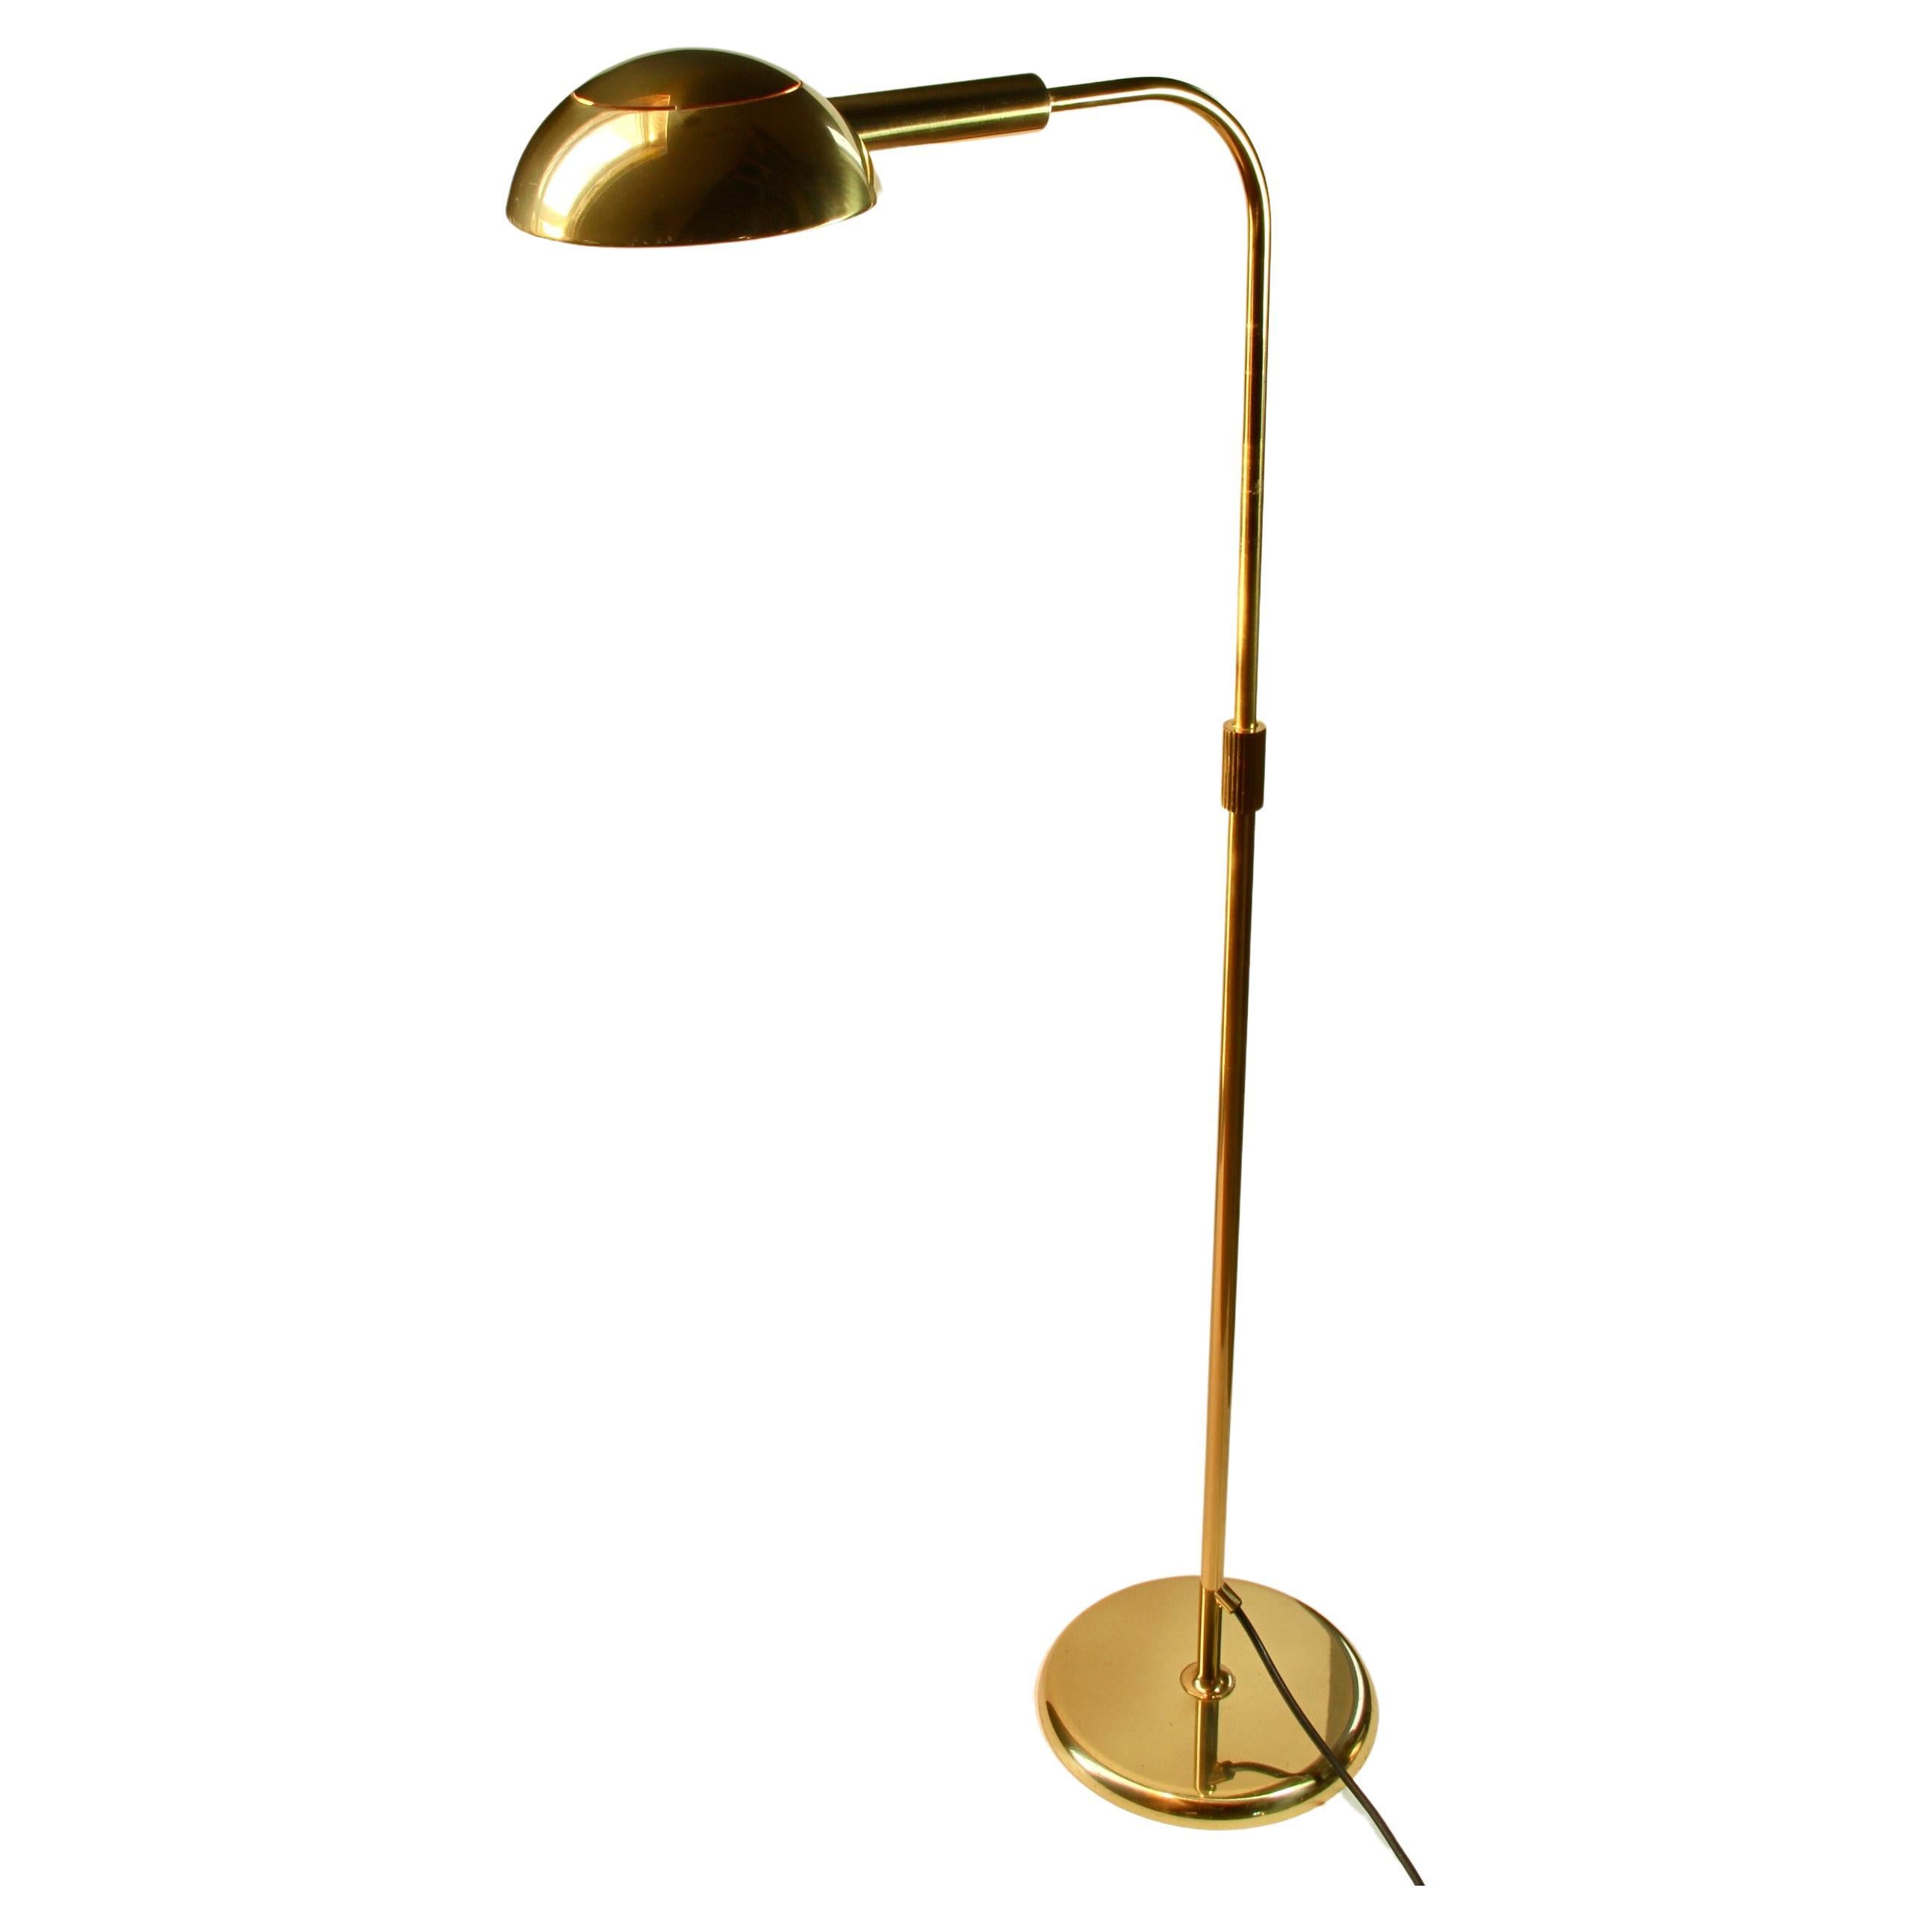 German Florian Schulz Mid-Century Vintage Modernist Brass 1970s Dimmable Floor Lamp For Sale